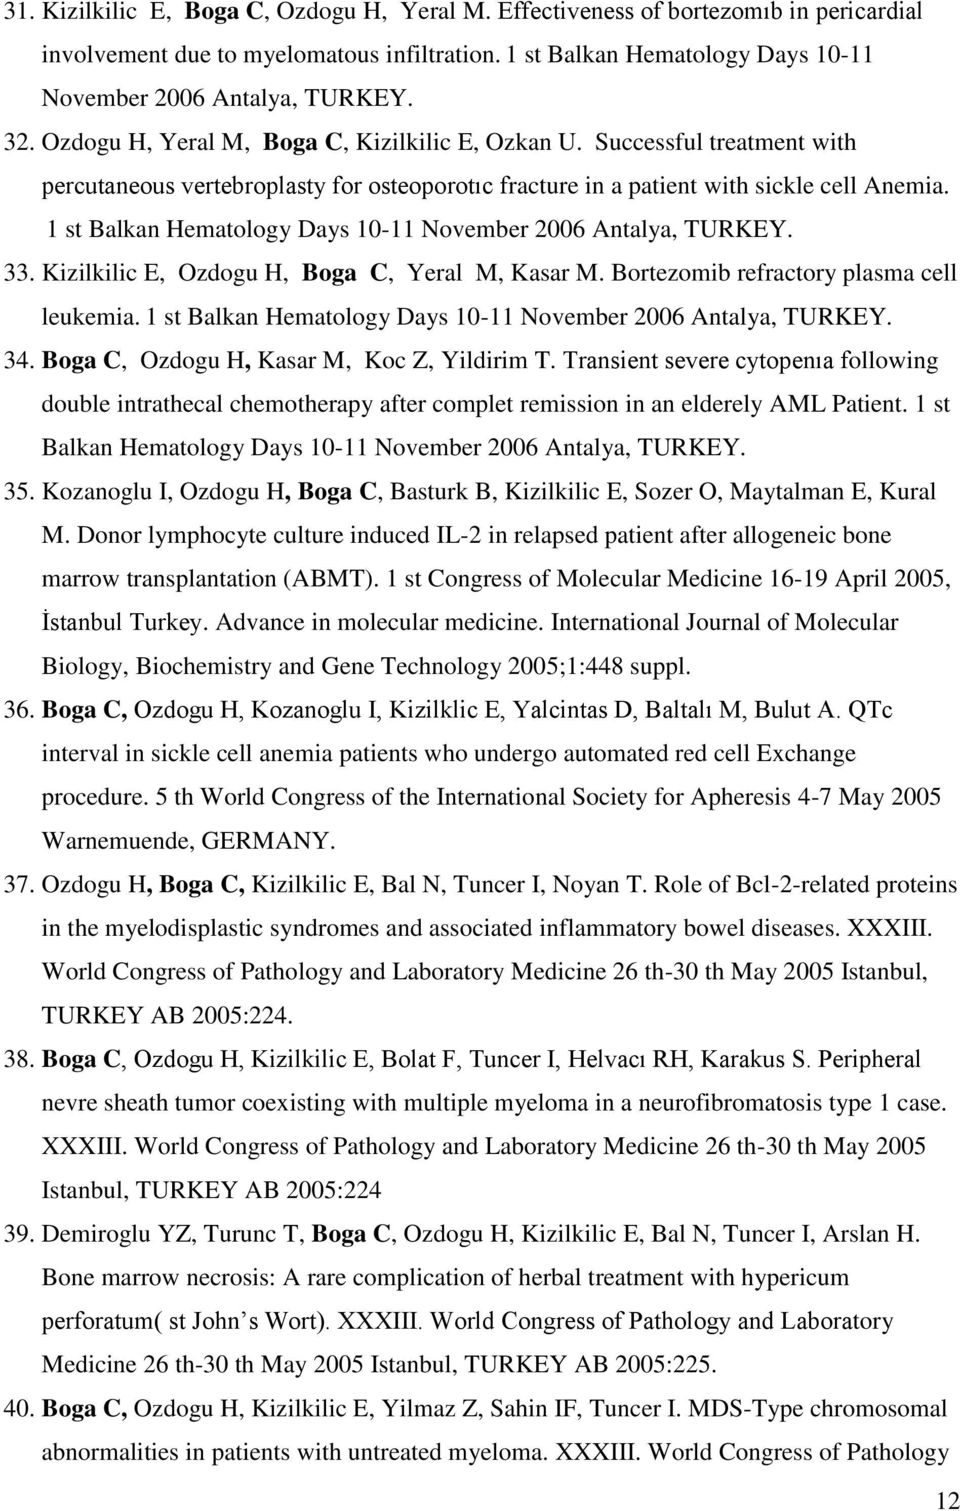 1 st Balkan Hematology Days 10-11 November 2006 Antalya, TURKEY. 33. Kizilkilic E, Ozdogu H, Boga C, Yeral M, Kasar M. Bortezomib refractory plasma cell leukemia.